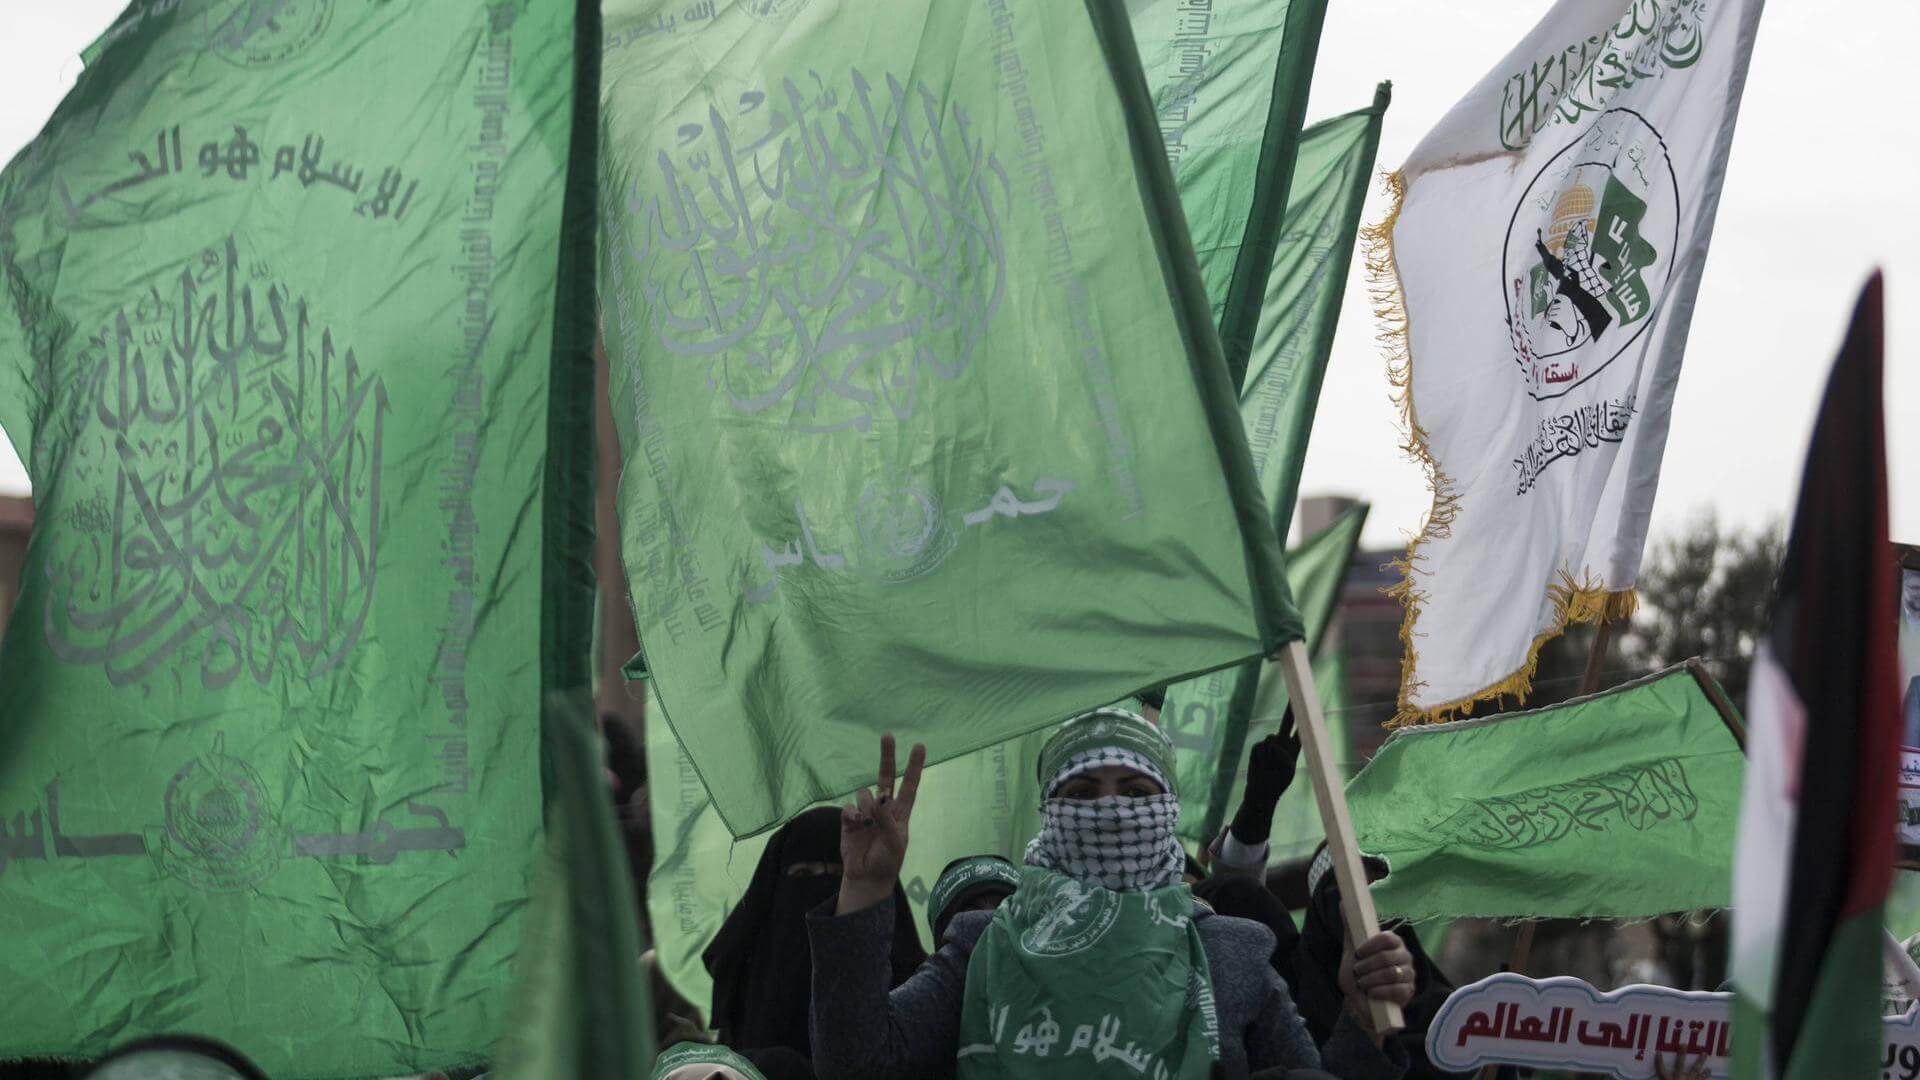 Germany Bans Hamas Flag Over Anti-Semitic Attacks During Gaza Conflict